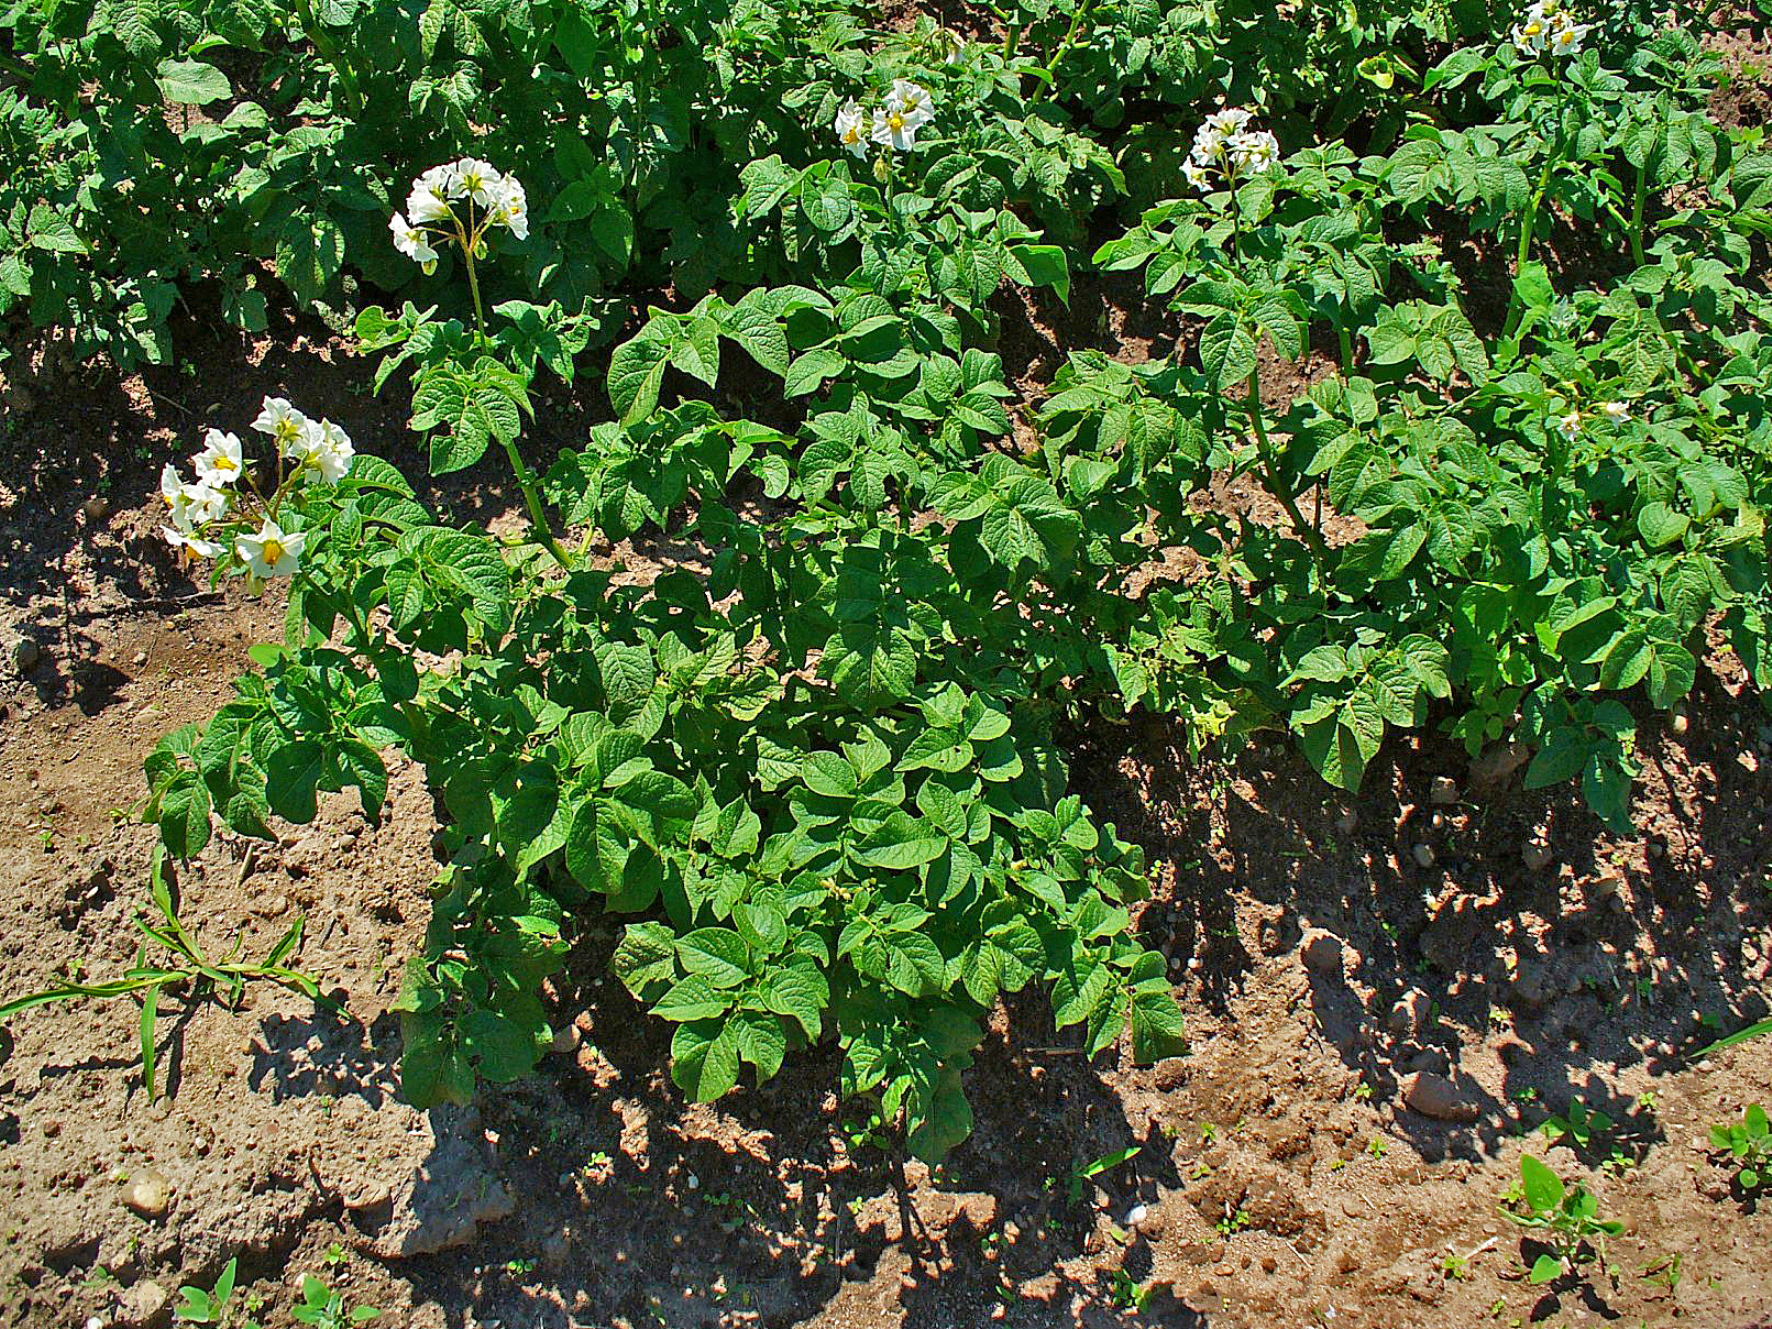 Potato plants & blossoms in a garden